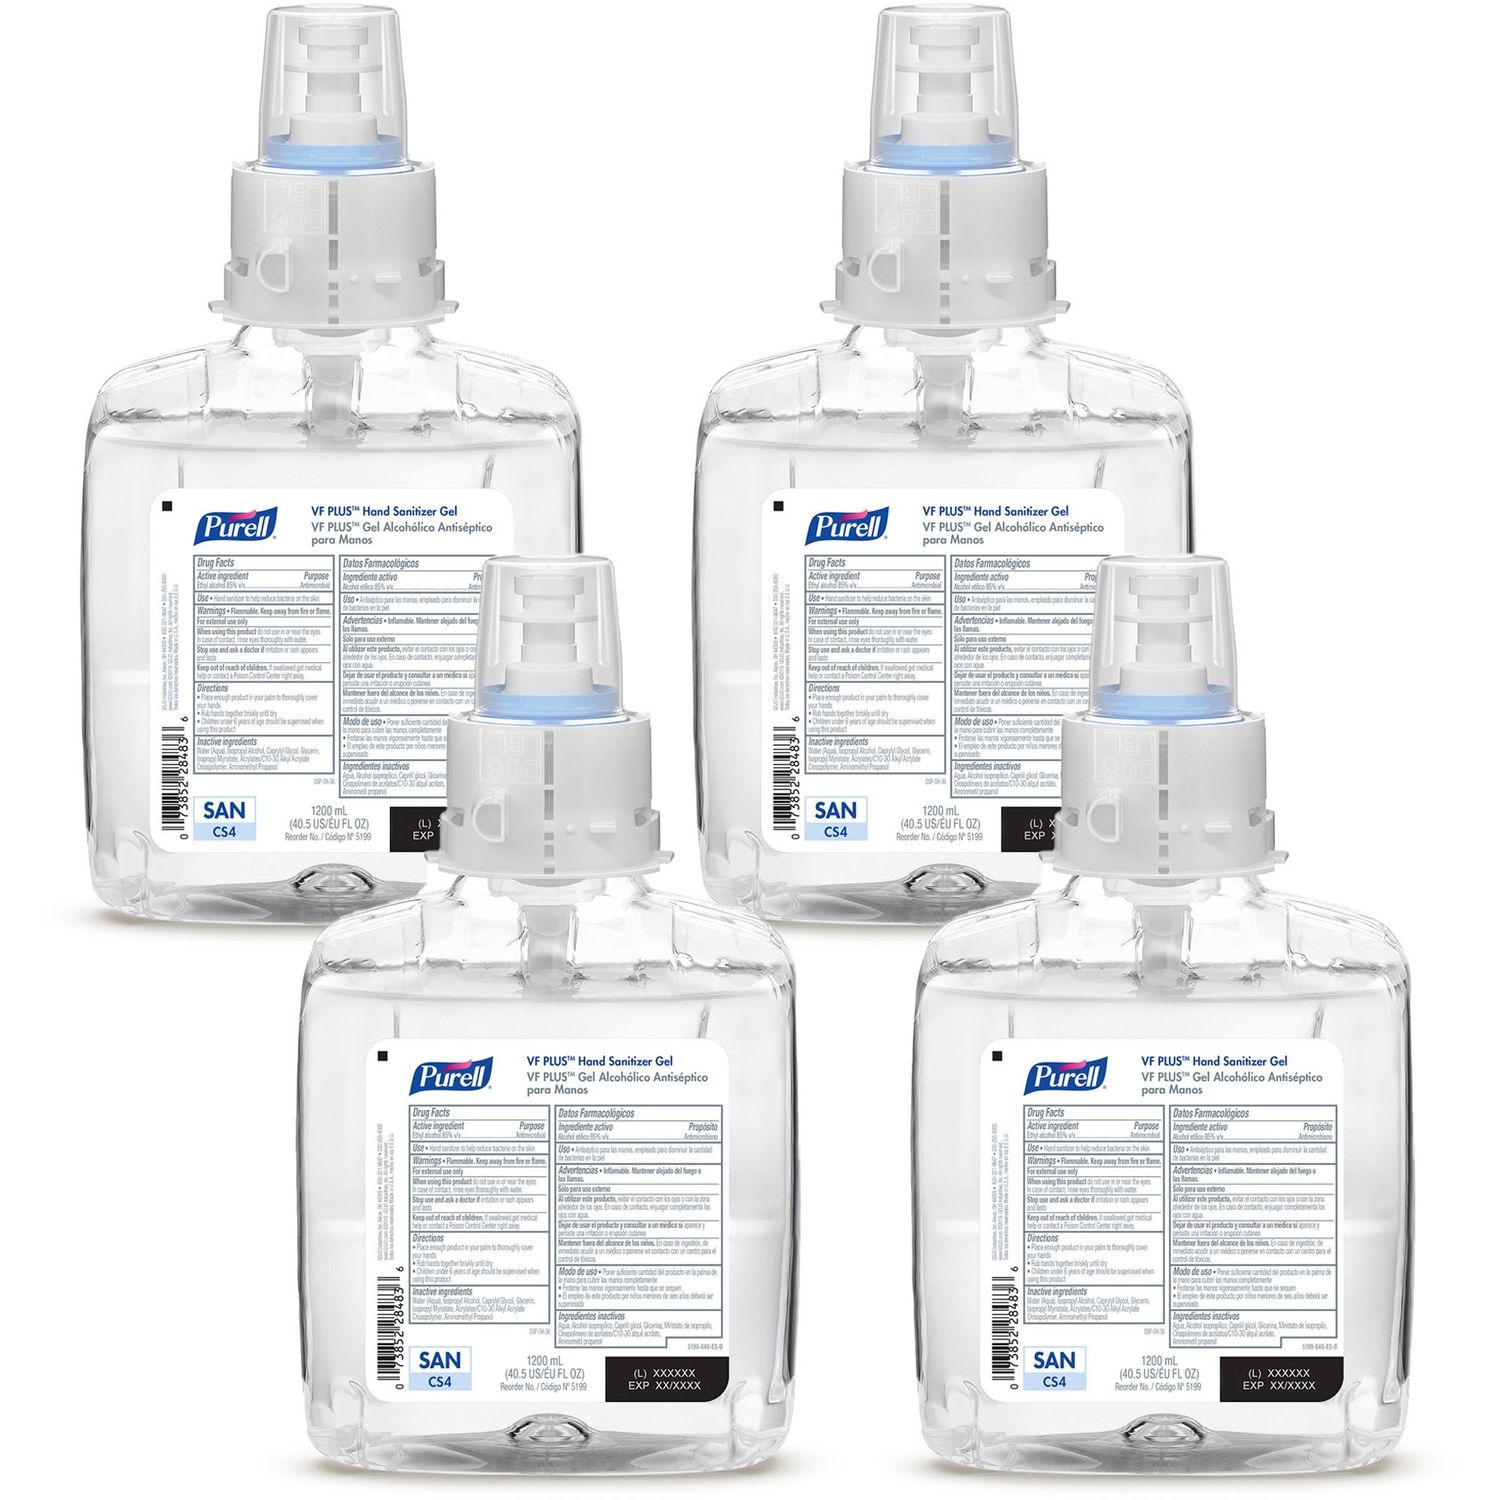 VF PLUS Hand Sanitizer Gel Refill 40.6 fl oz (1200 mL), Kill Germs, Bacteria Remover, Hand, Restaurant, Cruise Ship, Quick Drying, Fragrance-free, Dye-free, Hygienic, 4 / Carton